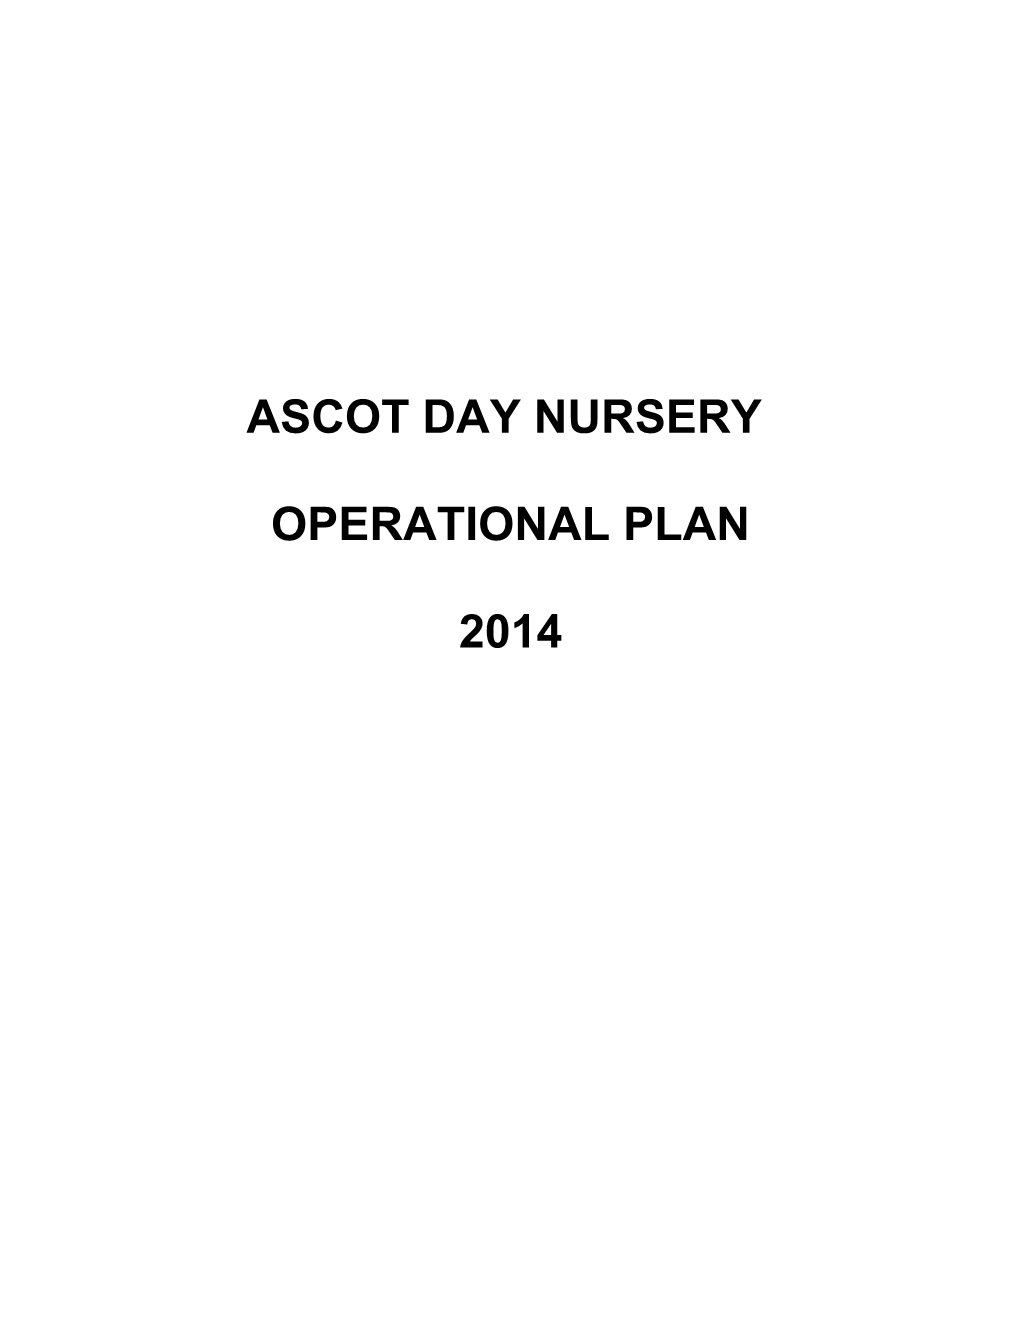 Ascot Day Nursery